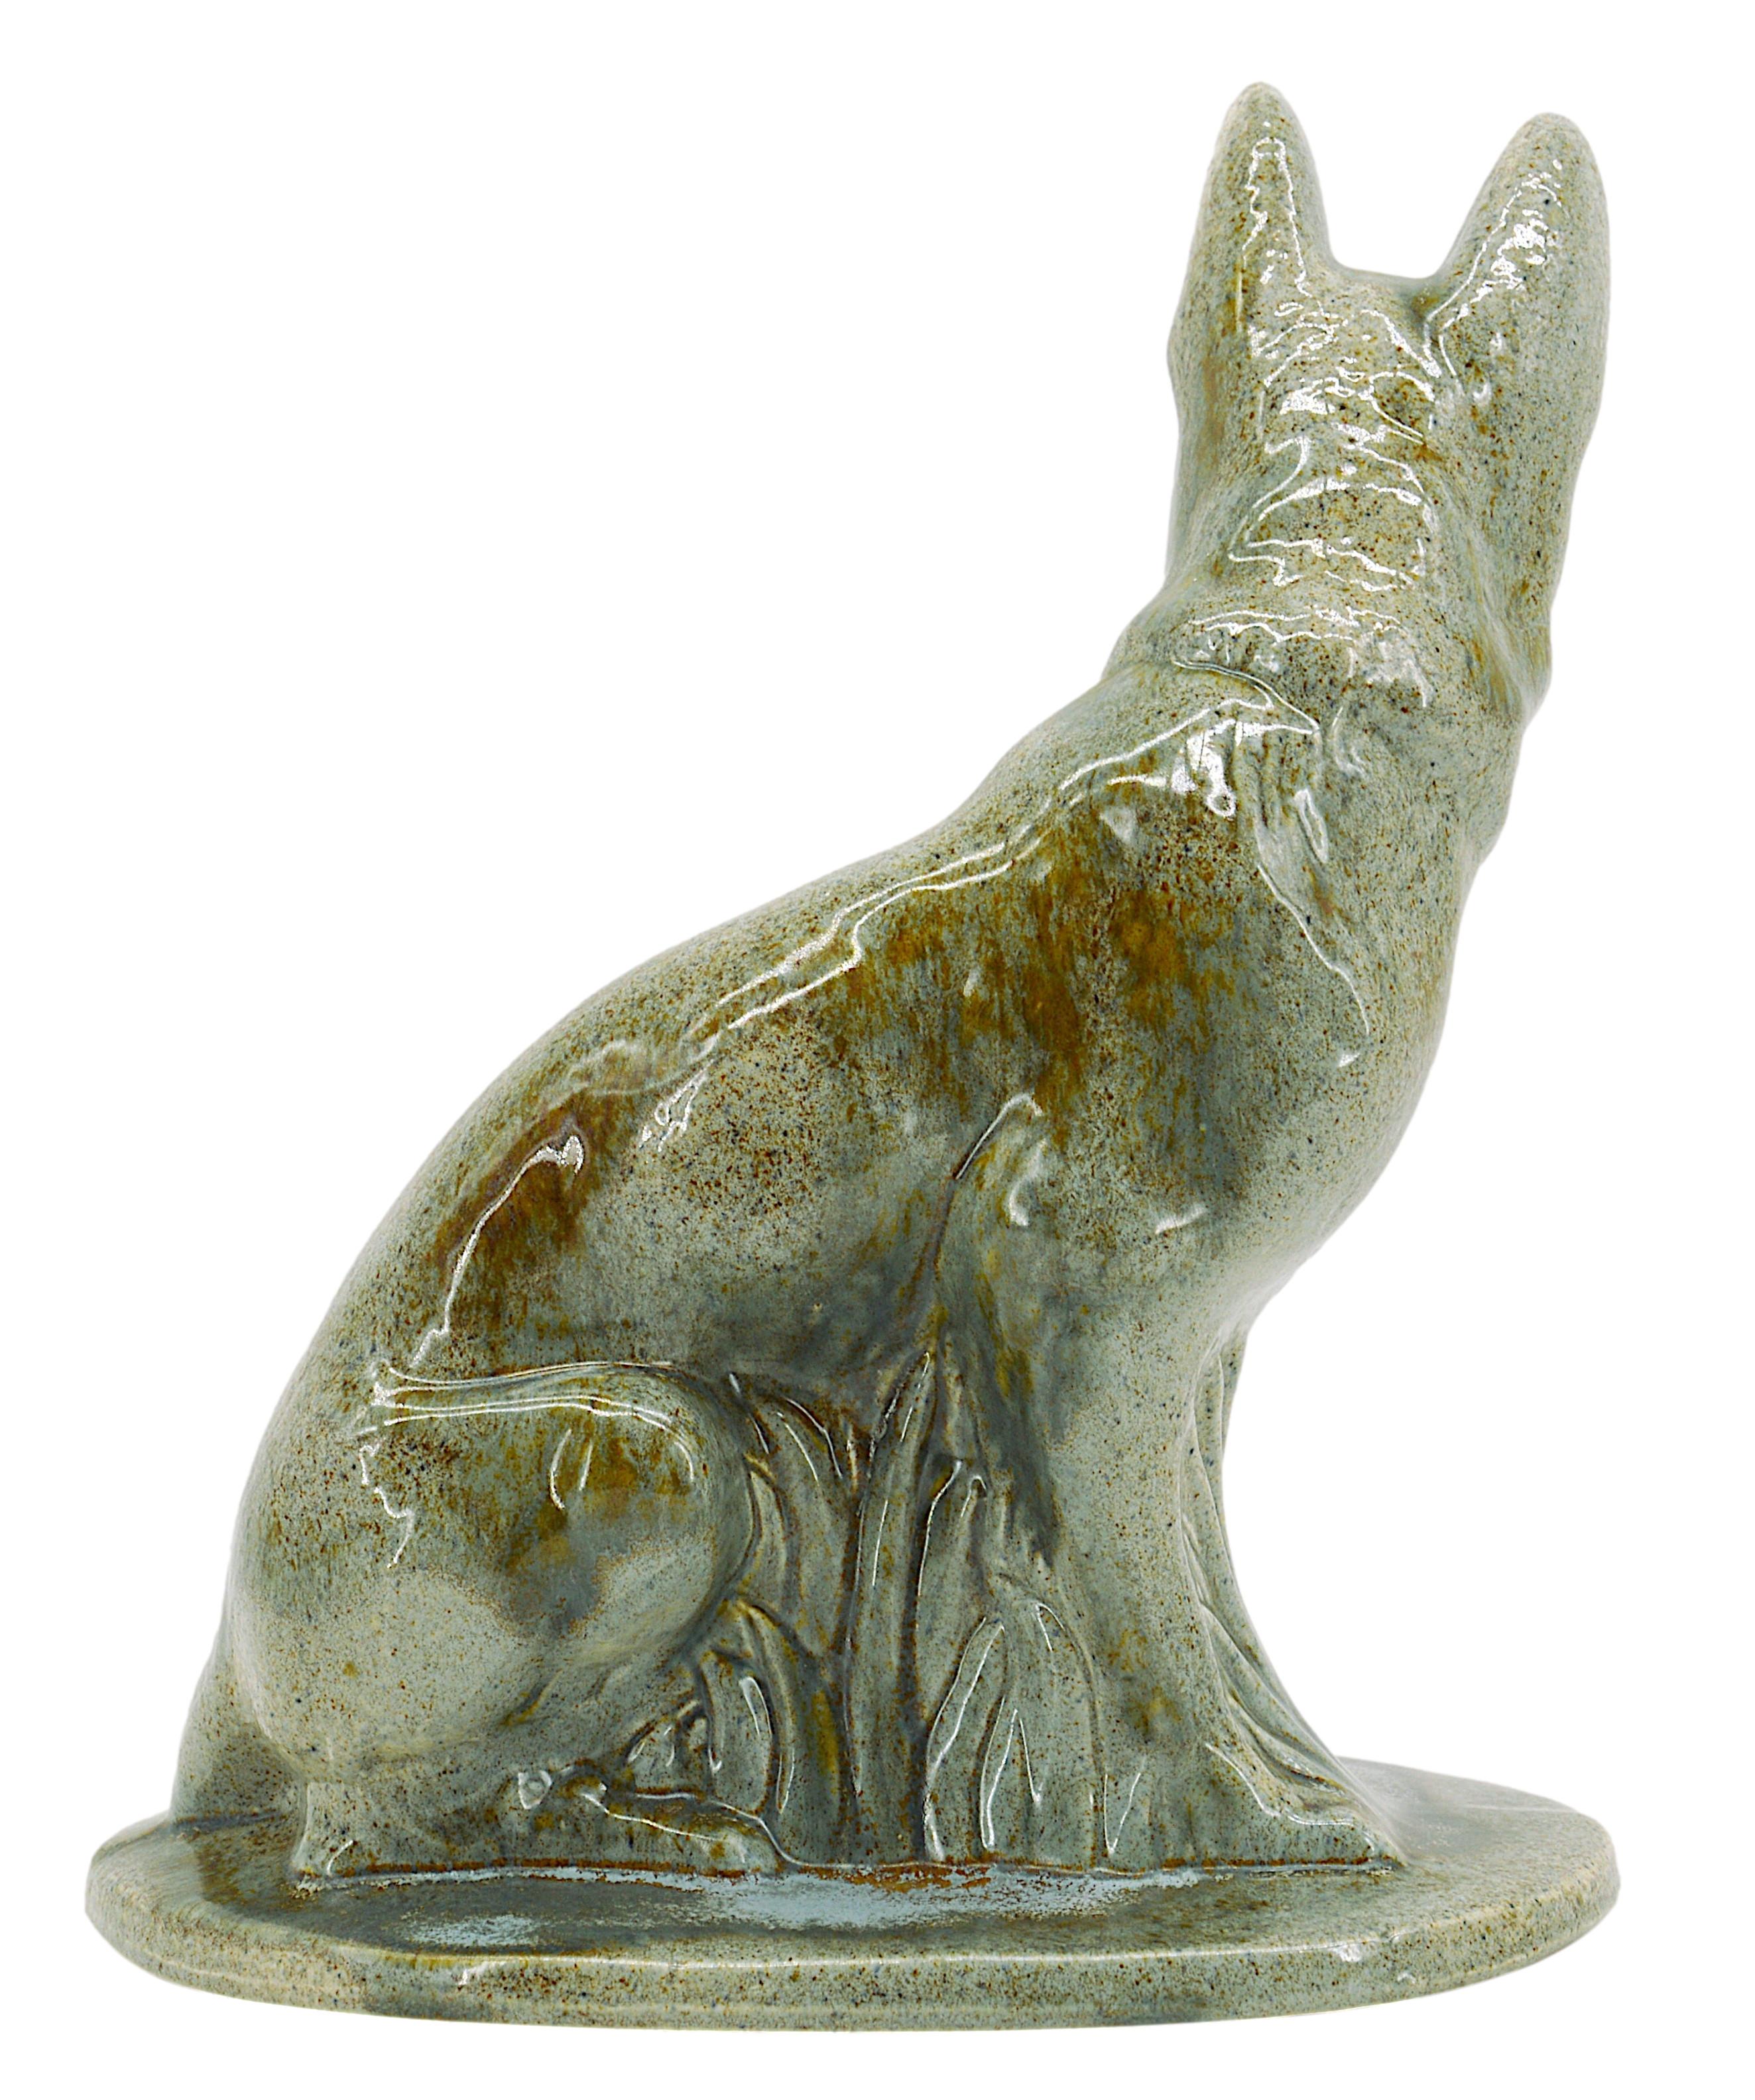 Moulin-des-loups, Orchies, French Art Deco Ceramic German Shepherd, 1930s 1